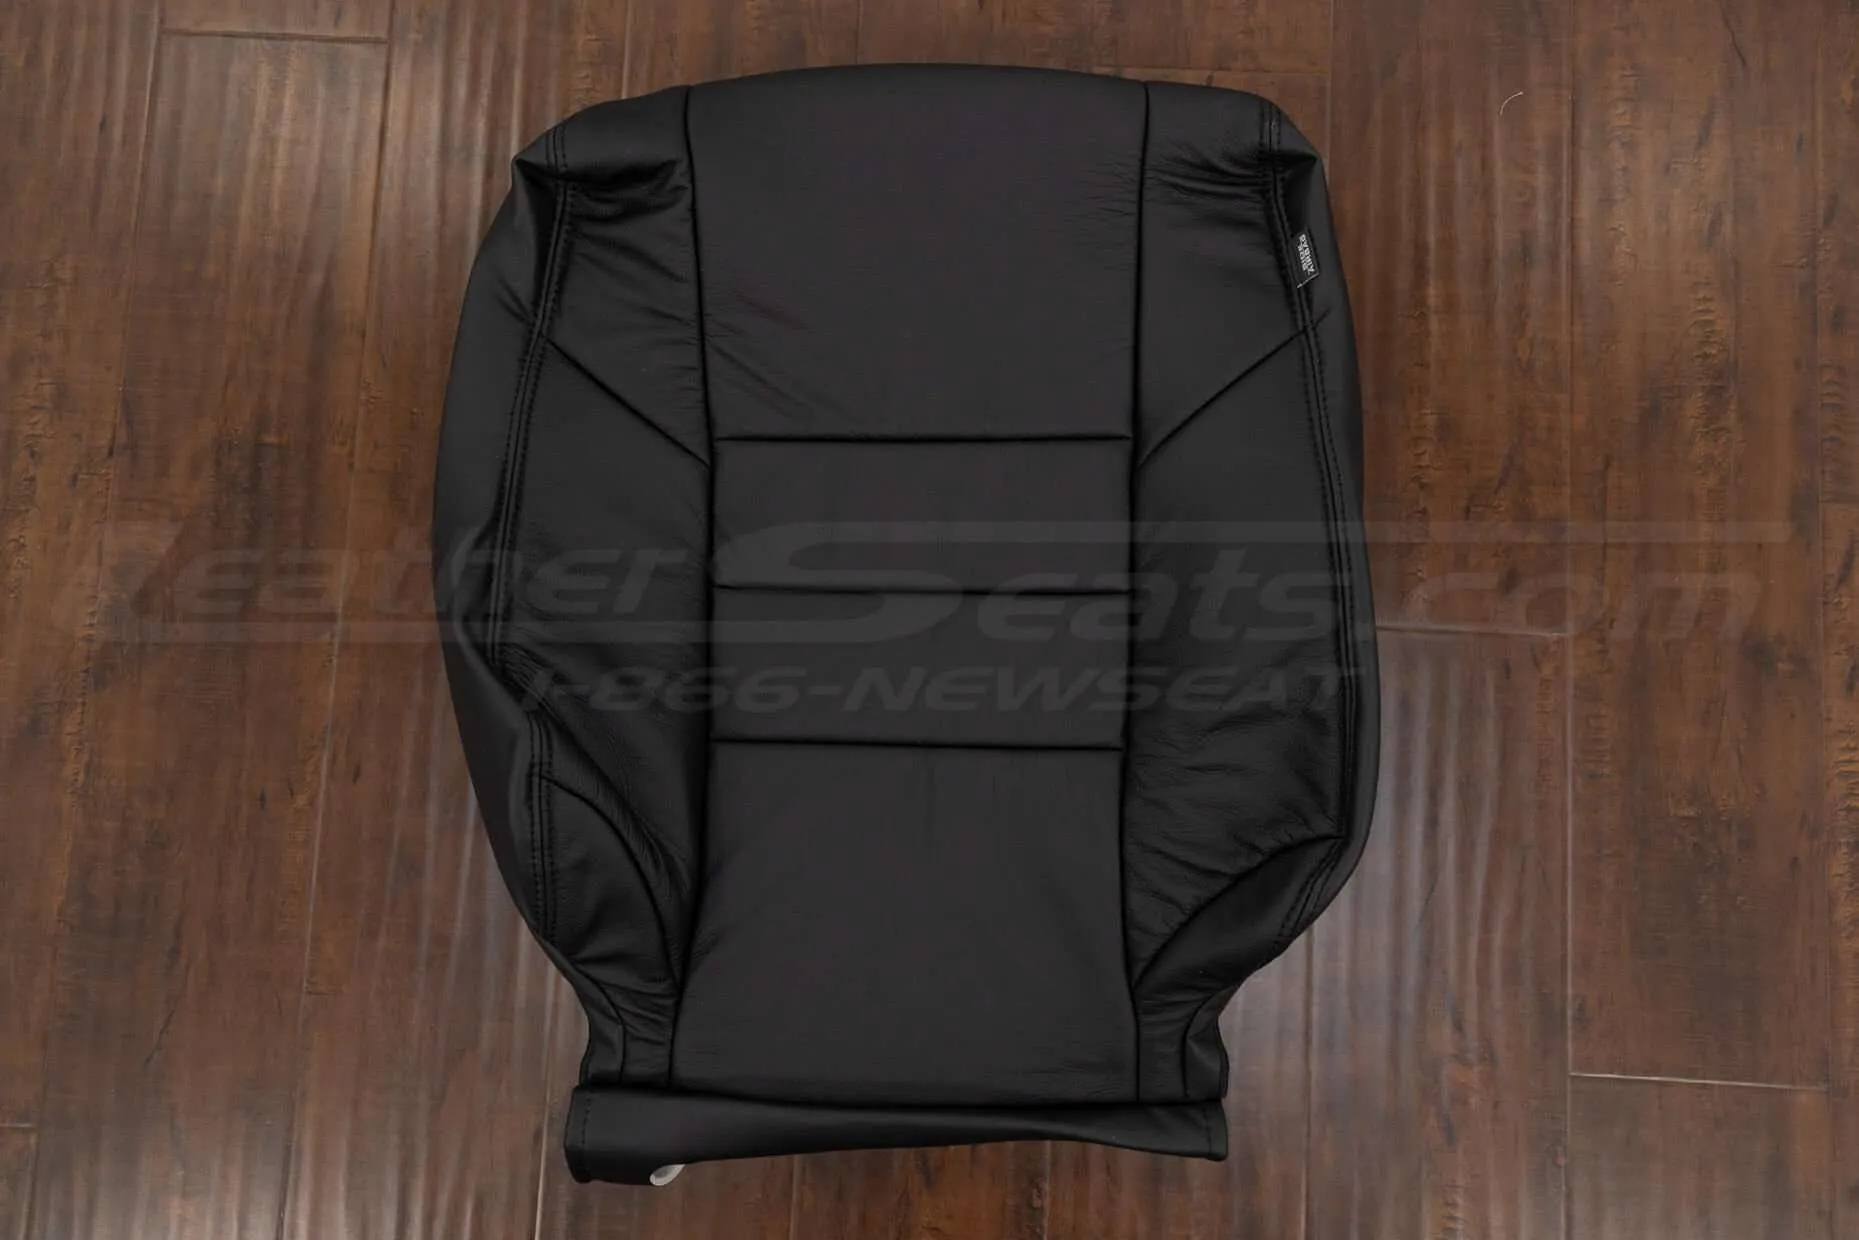 Honda Accord black leather backrest upholstery